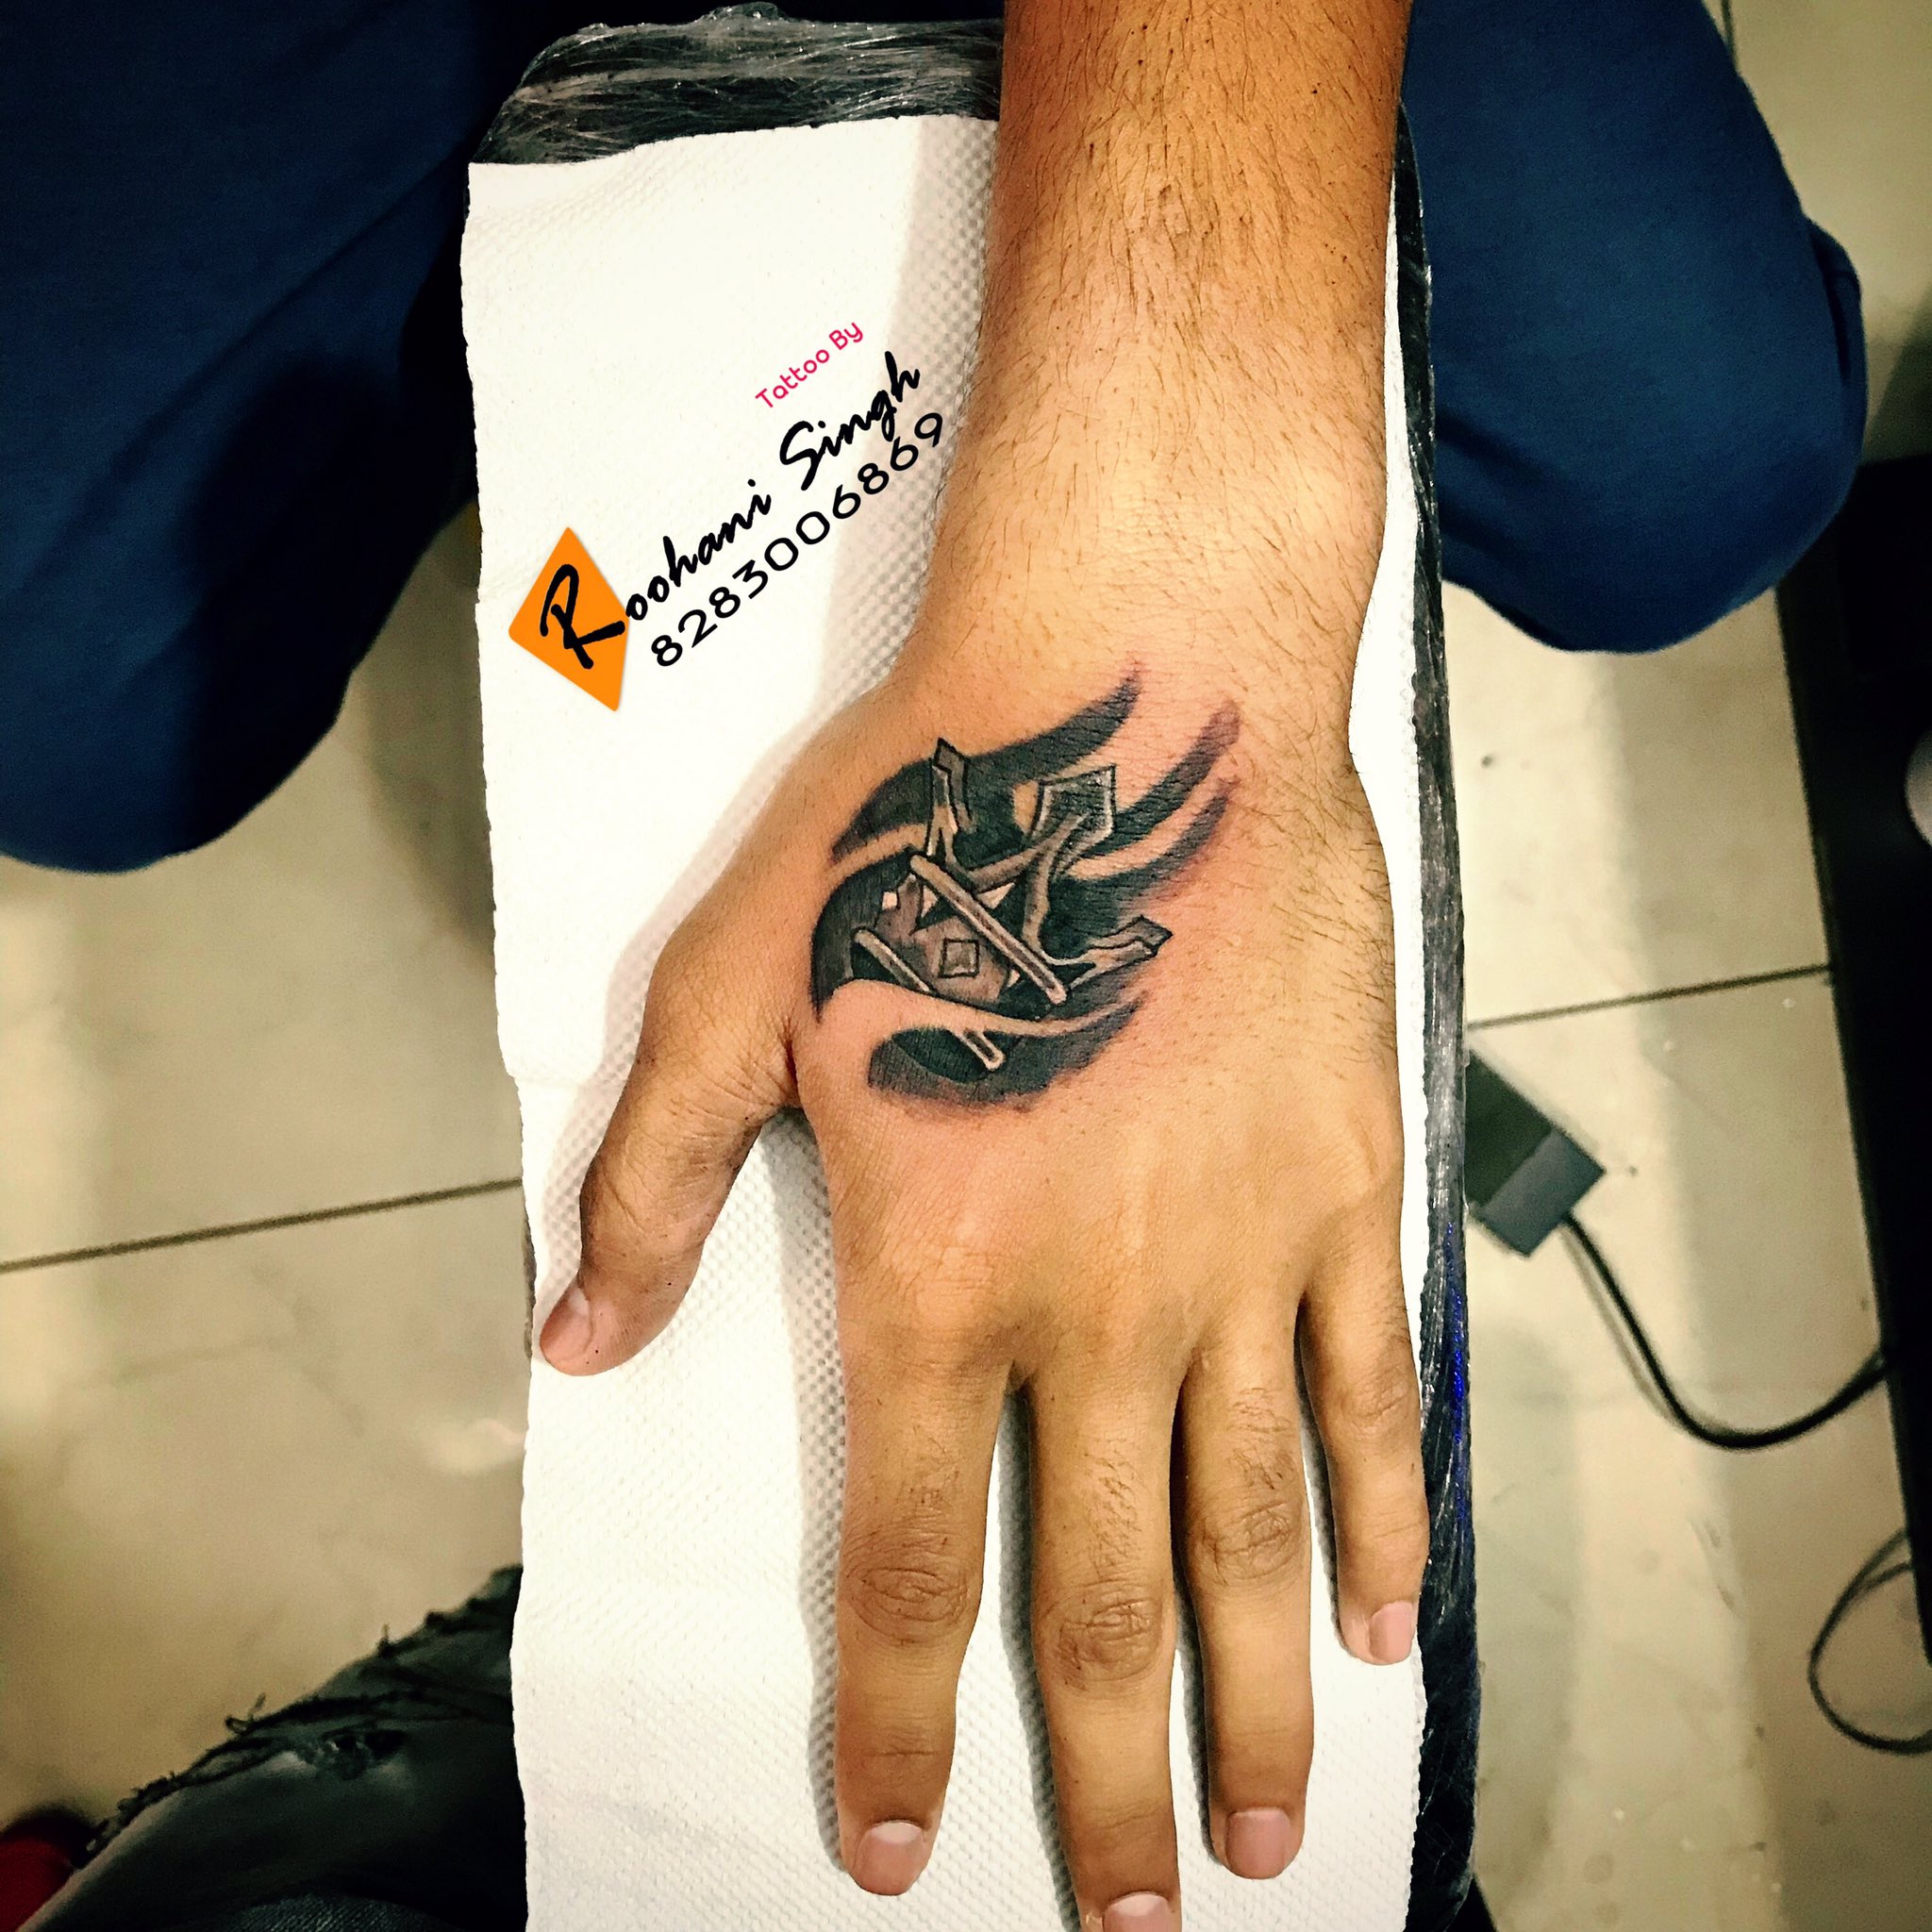 Denish Tattoo on Instagram Check out this amazing tattoo by Denish sailor  denishsailor at Denishs Tattoo  Art studio denishtattooart To  book appointment